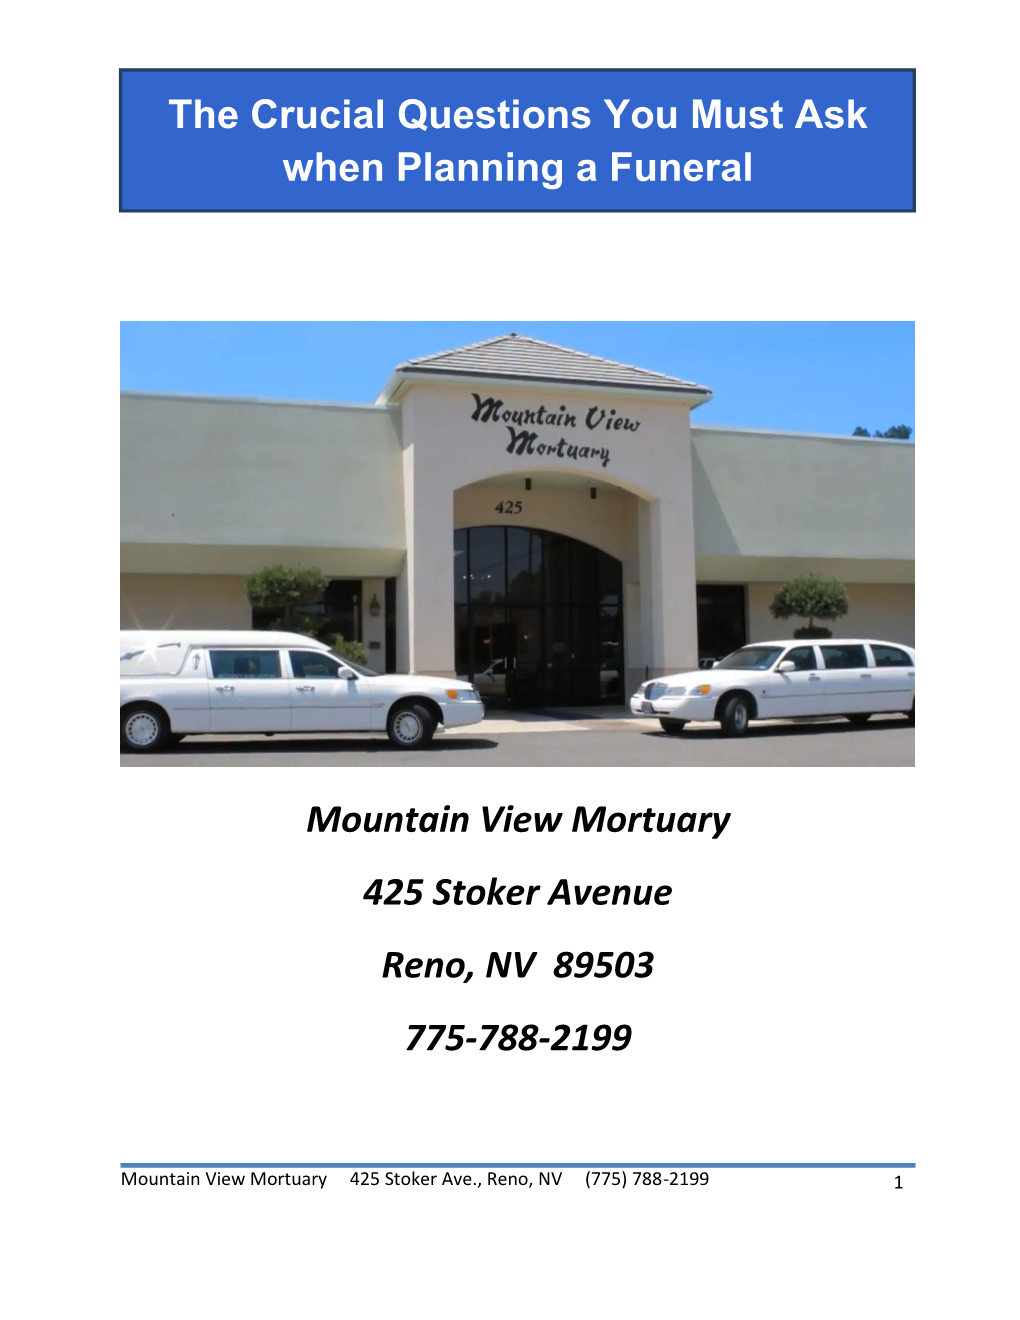 Mountain View Mortuary 425 Stoker Avenue Reno, NV 89503 775-788-2199